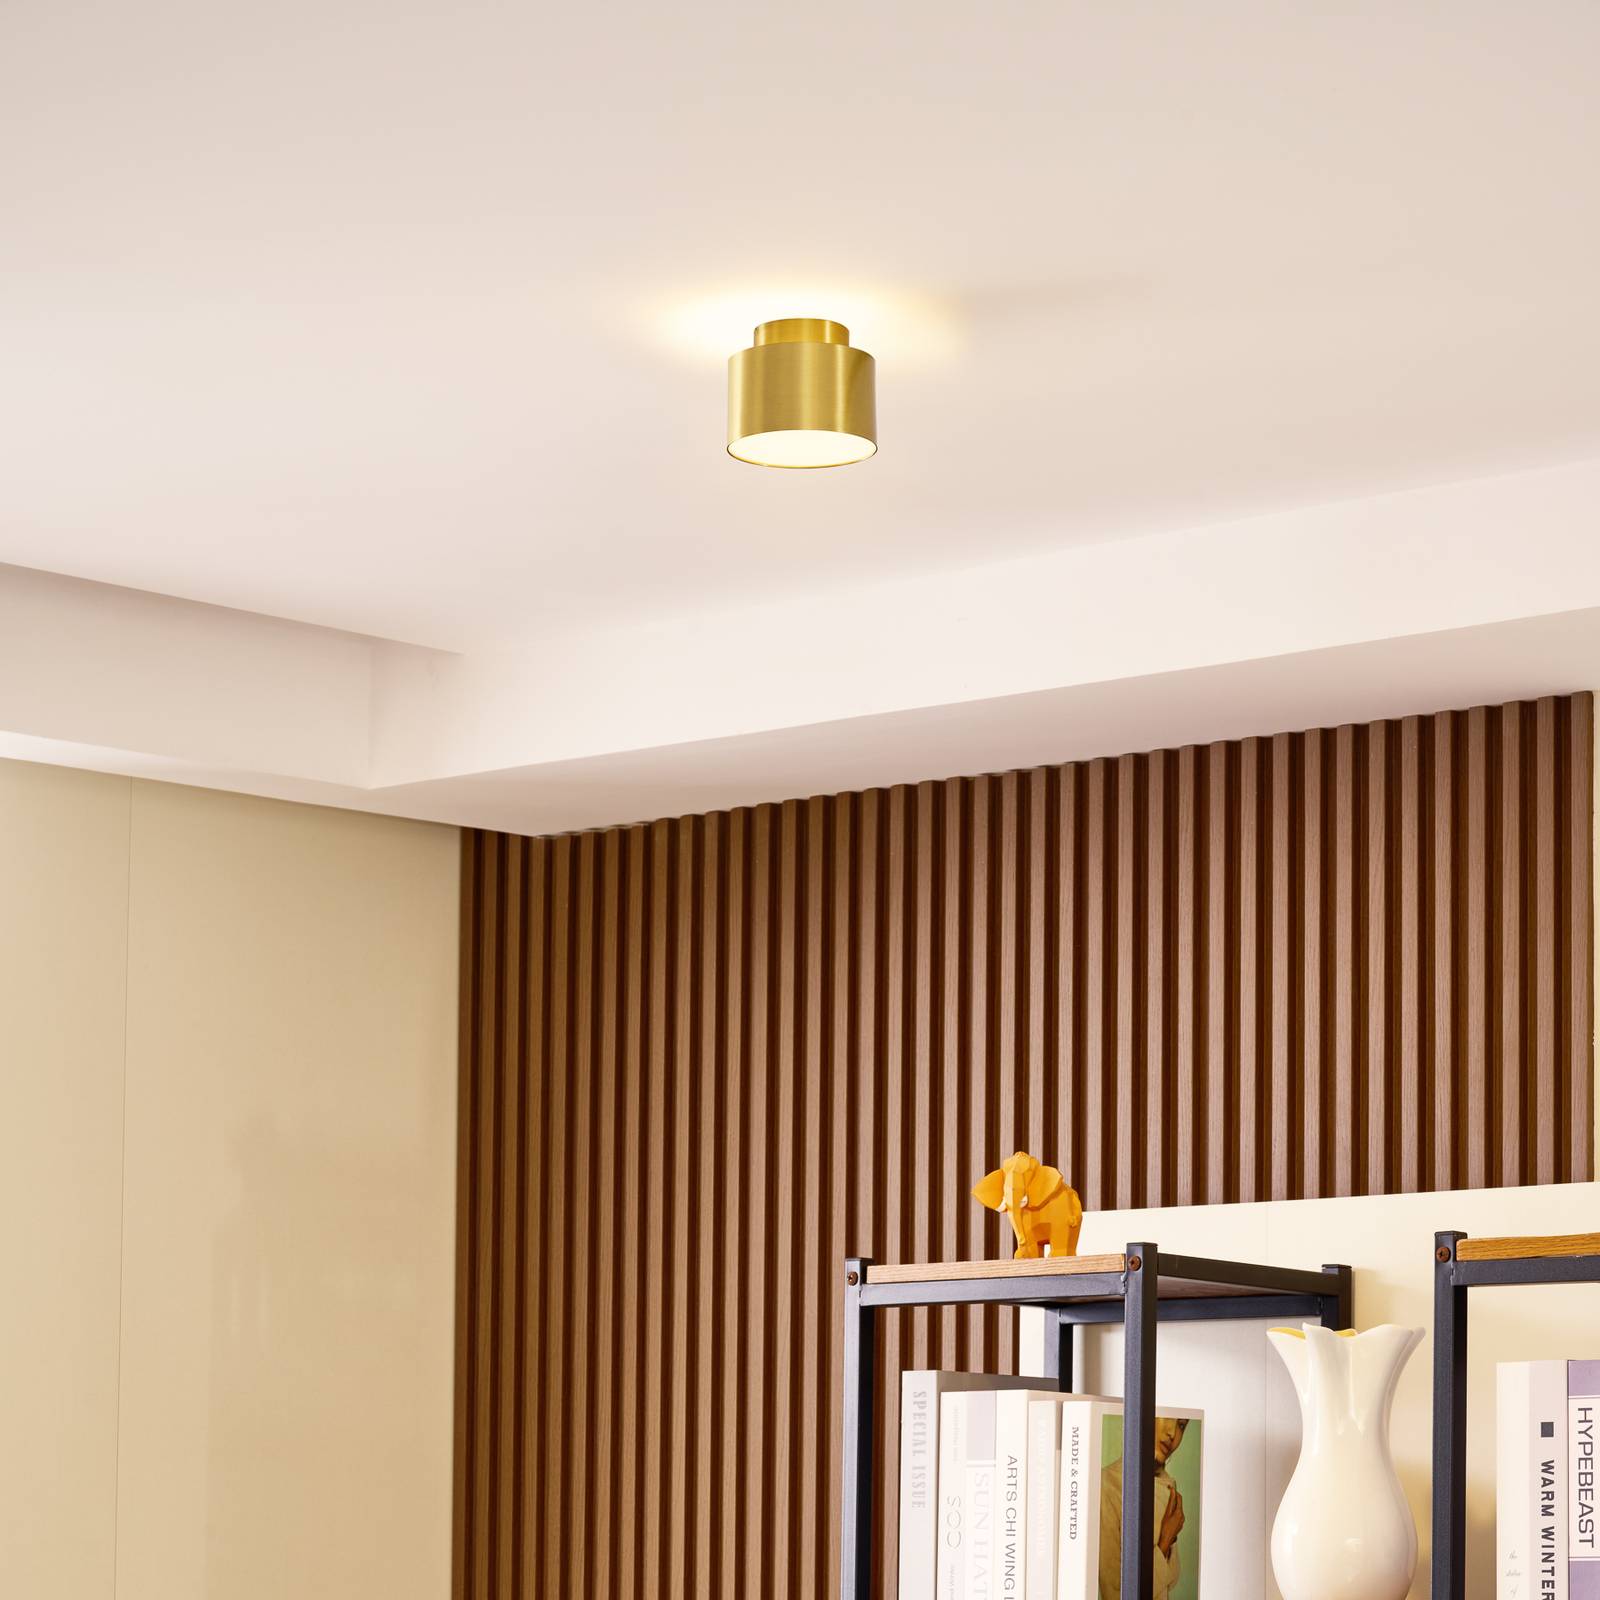 Lindby Nivoria LED-es reflektor, 11 x 8,8 cm, arany színű, 4 darabos